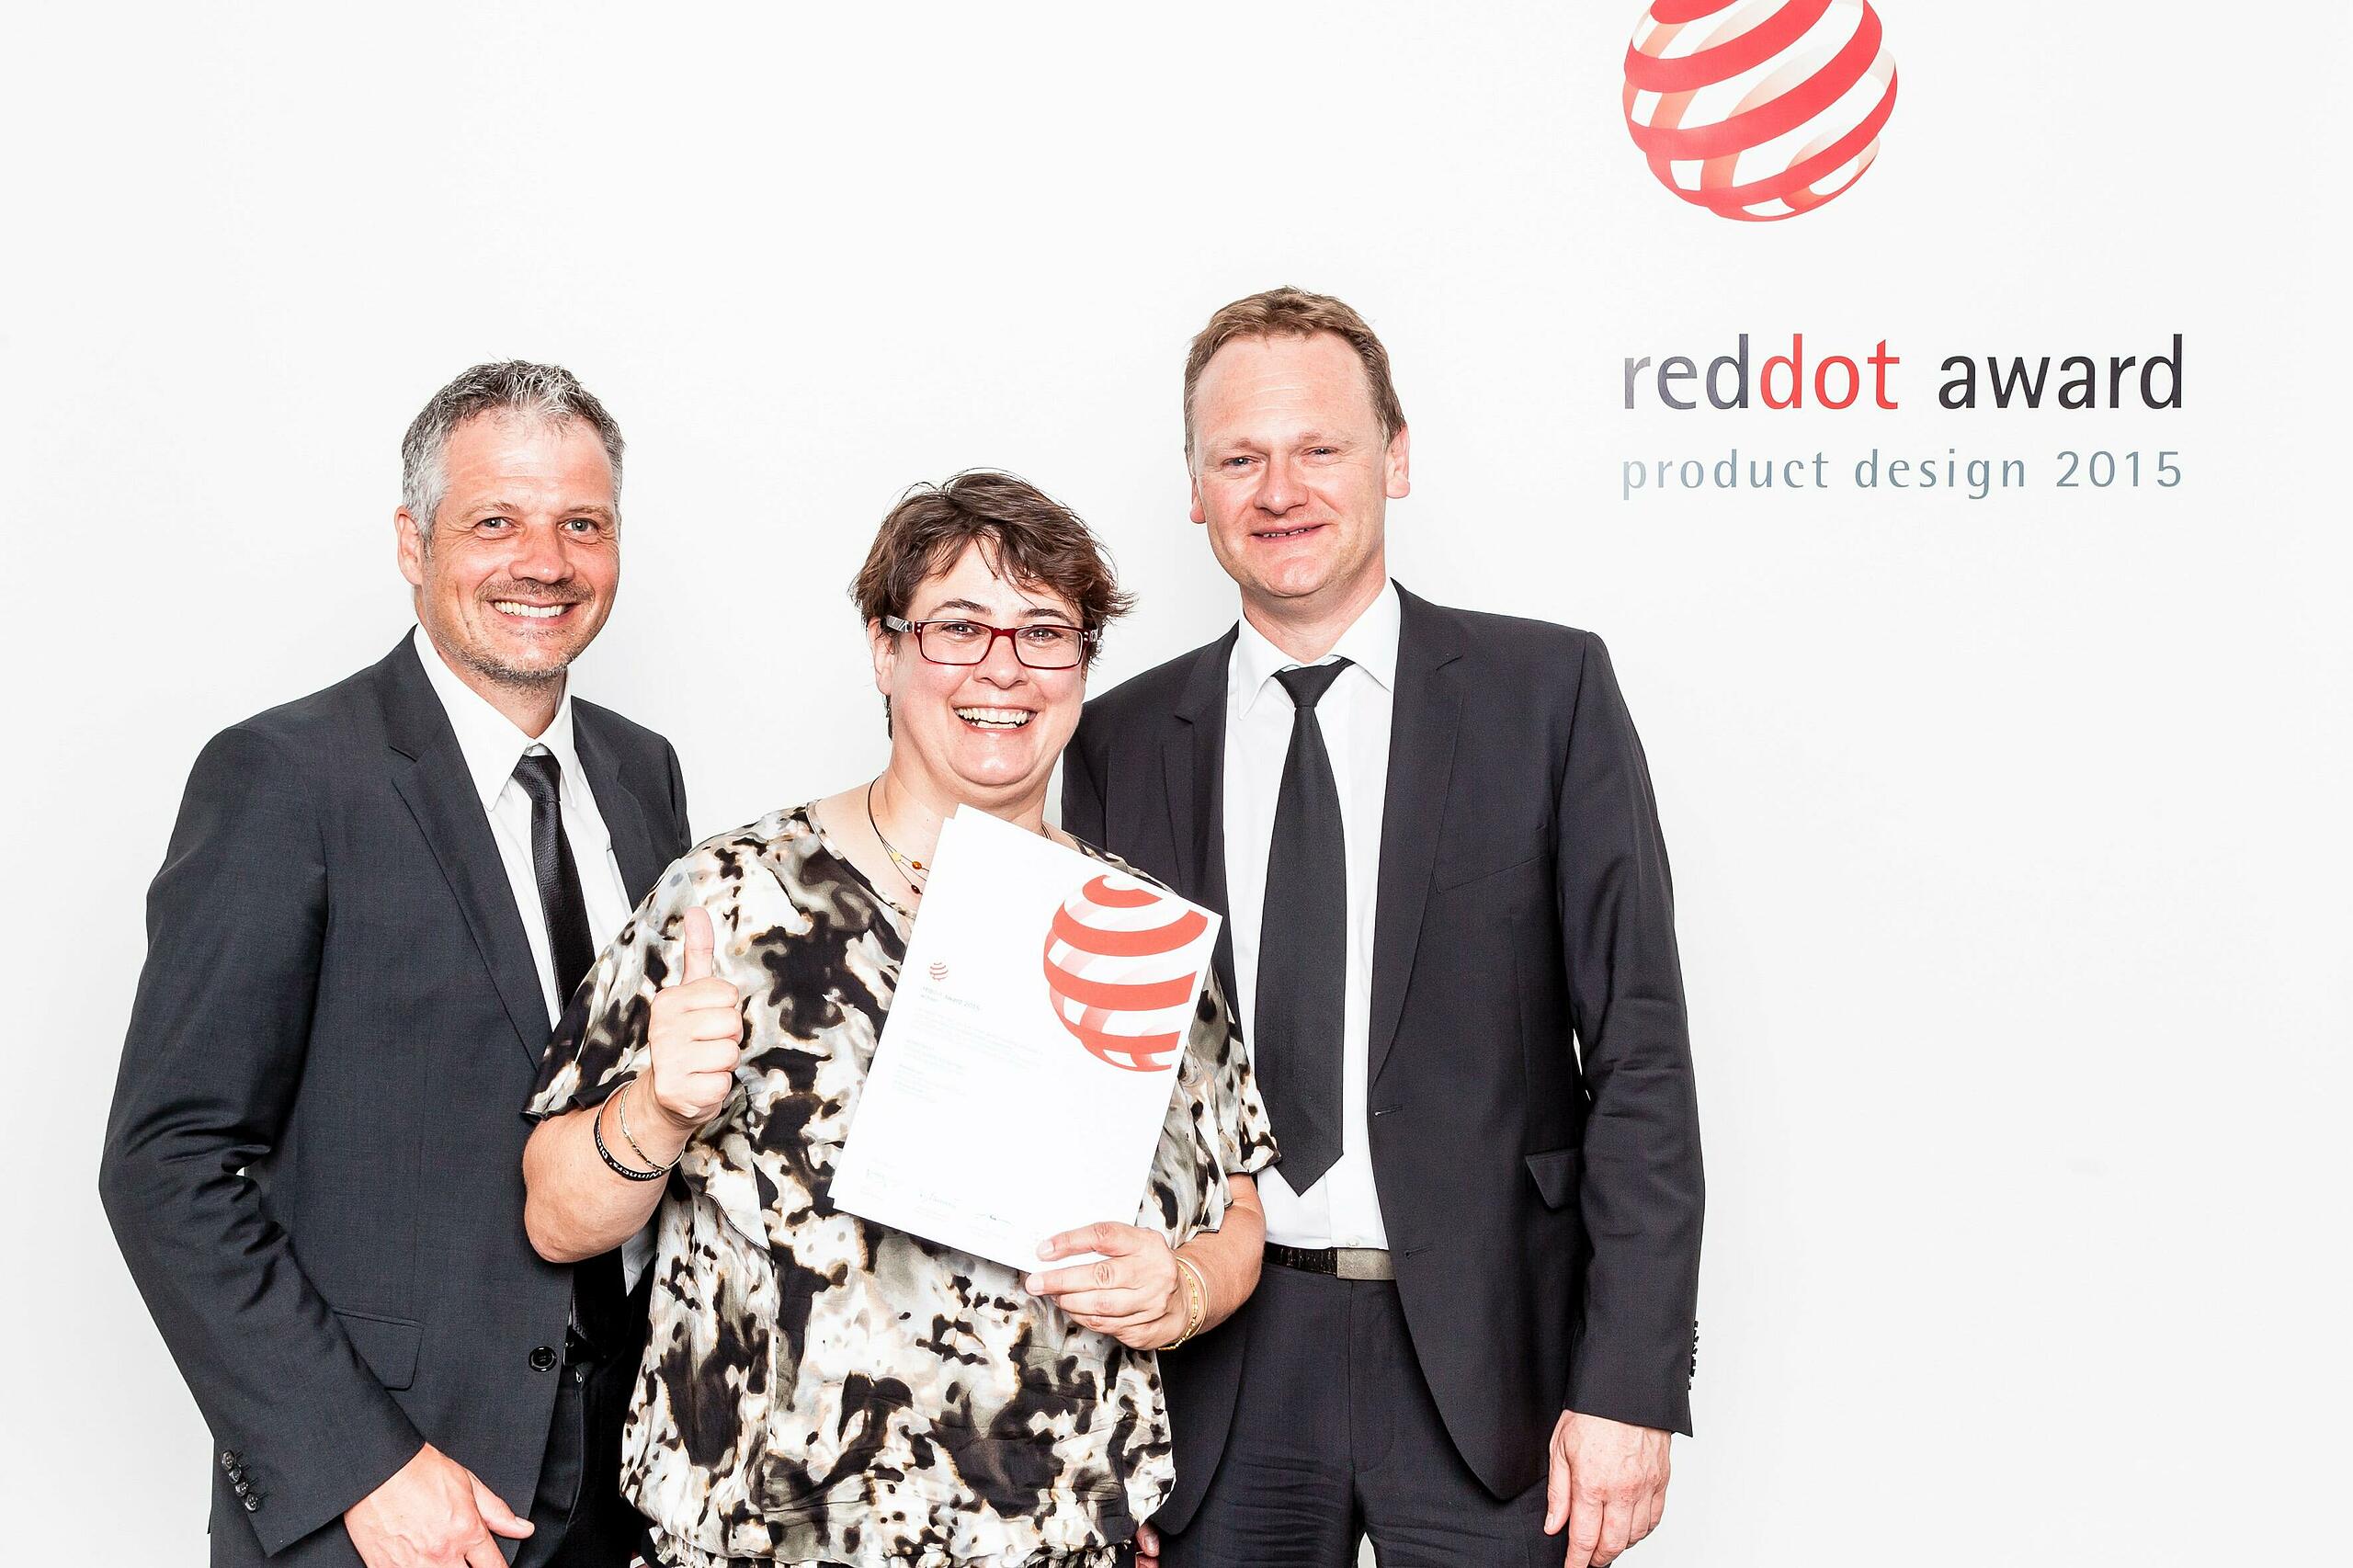 Preisverleihung Reddot Award 2015